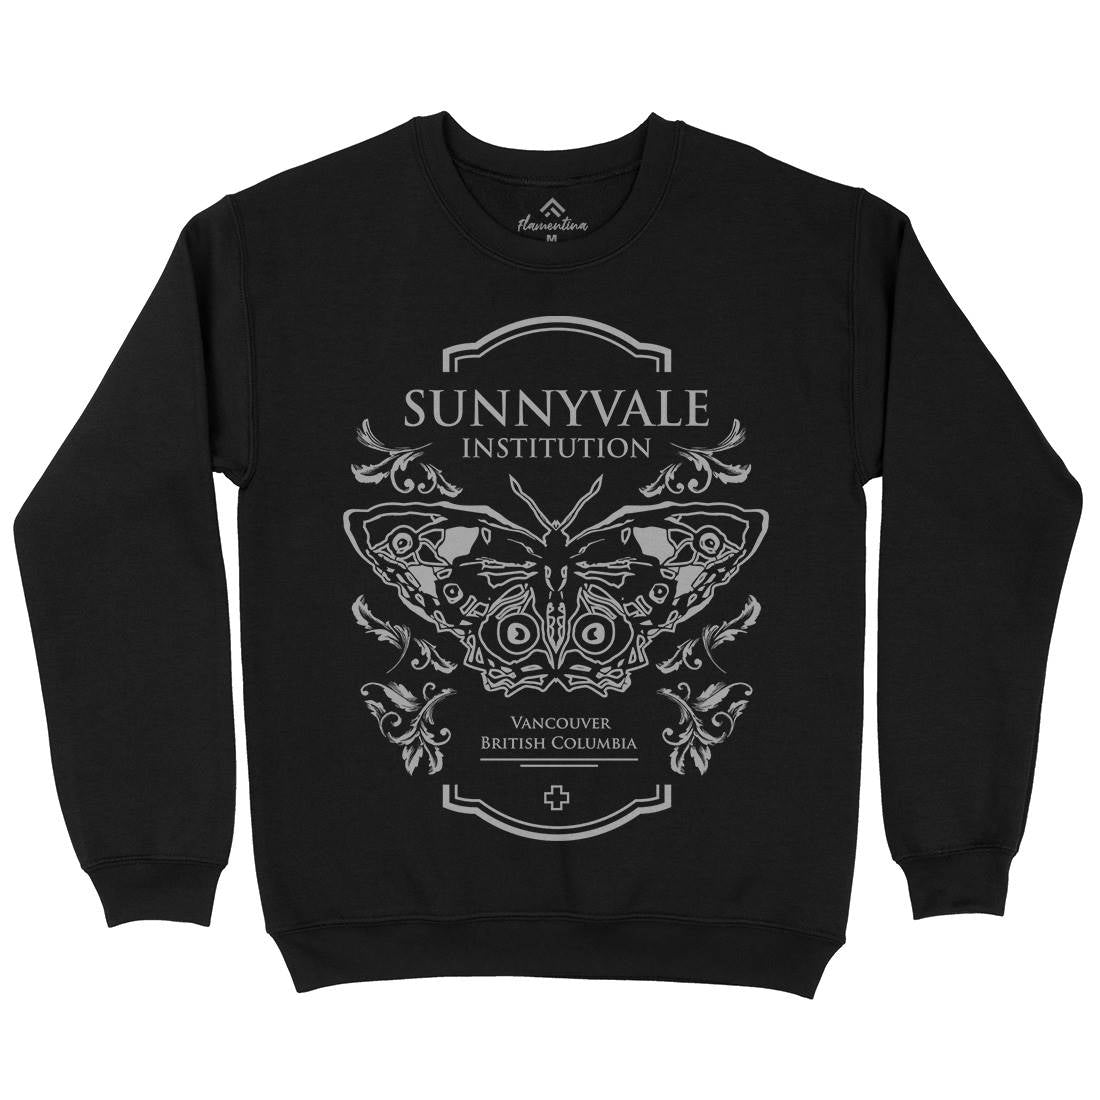 Sunnyvale Institution Kids Crew Neck Sweatshirt Space D232